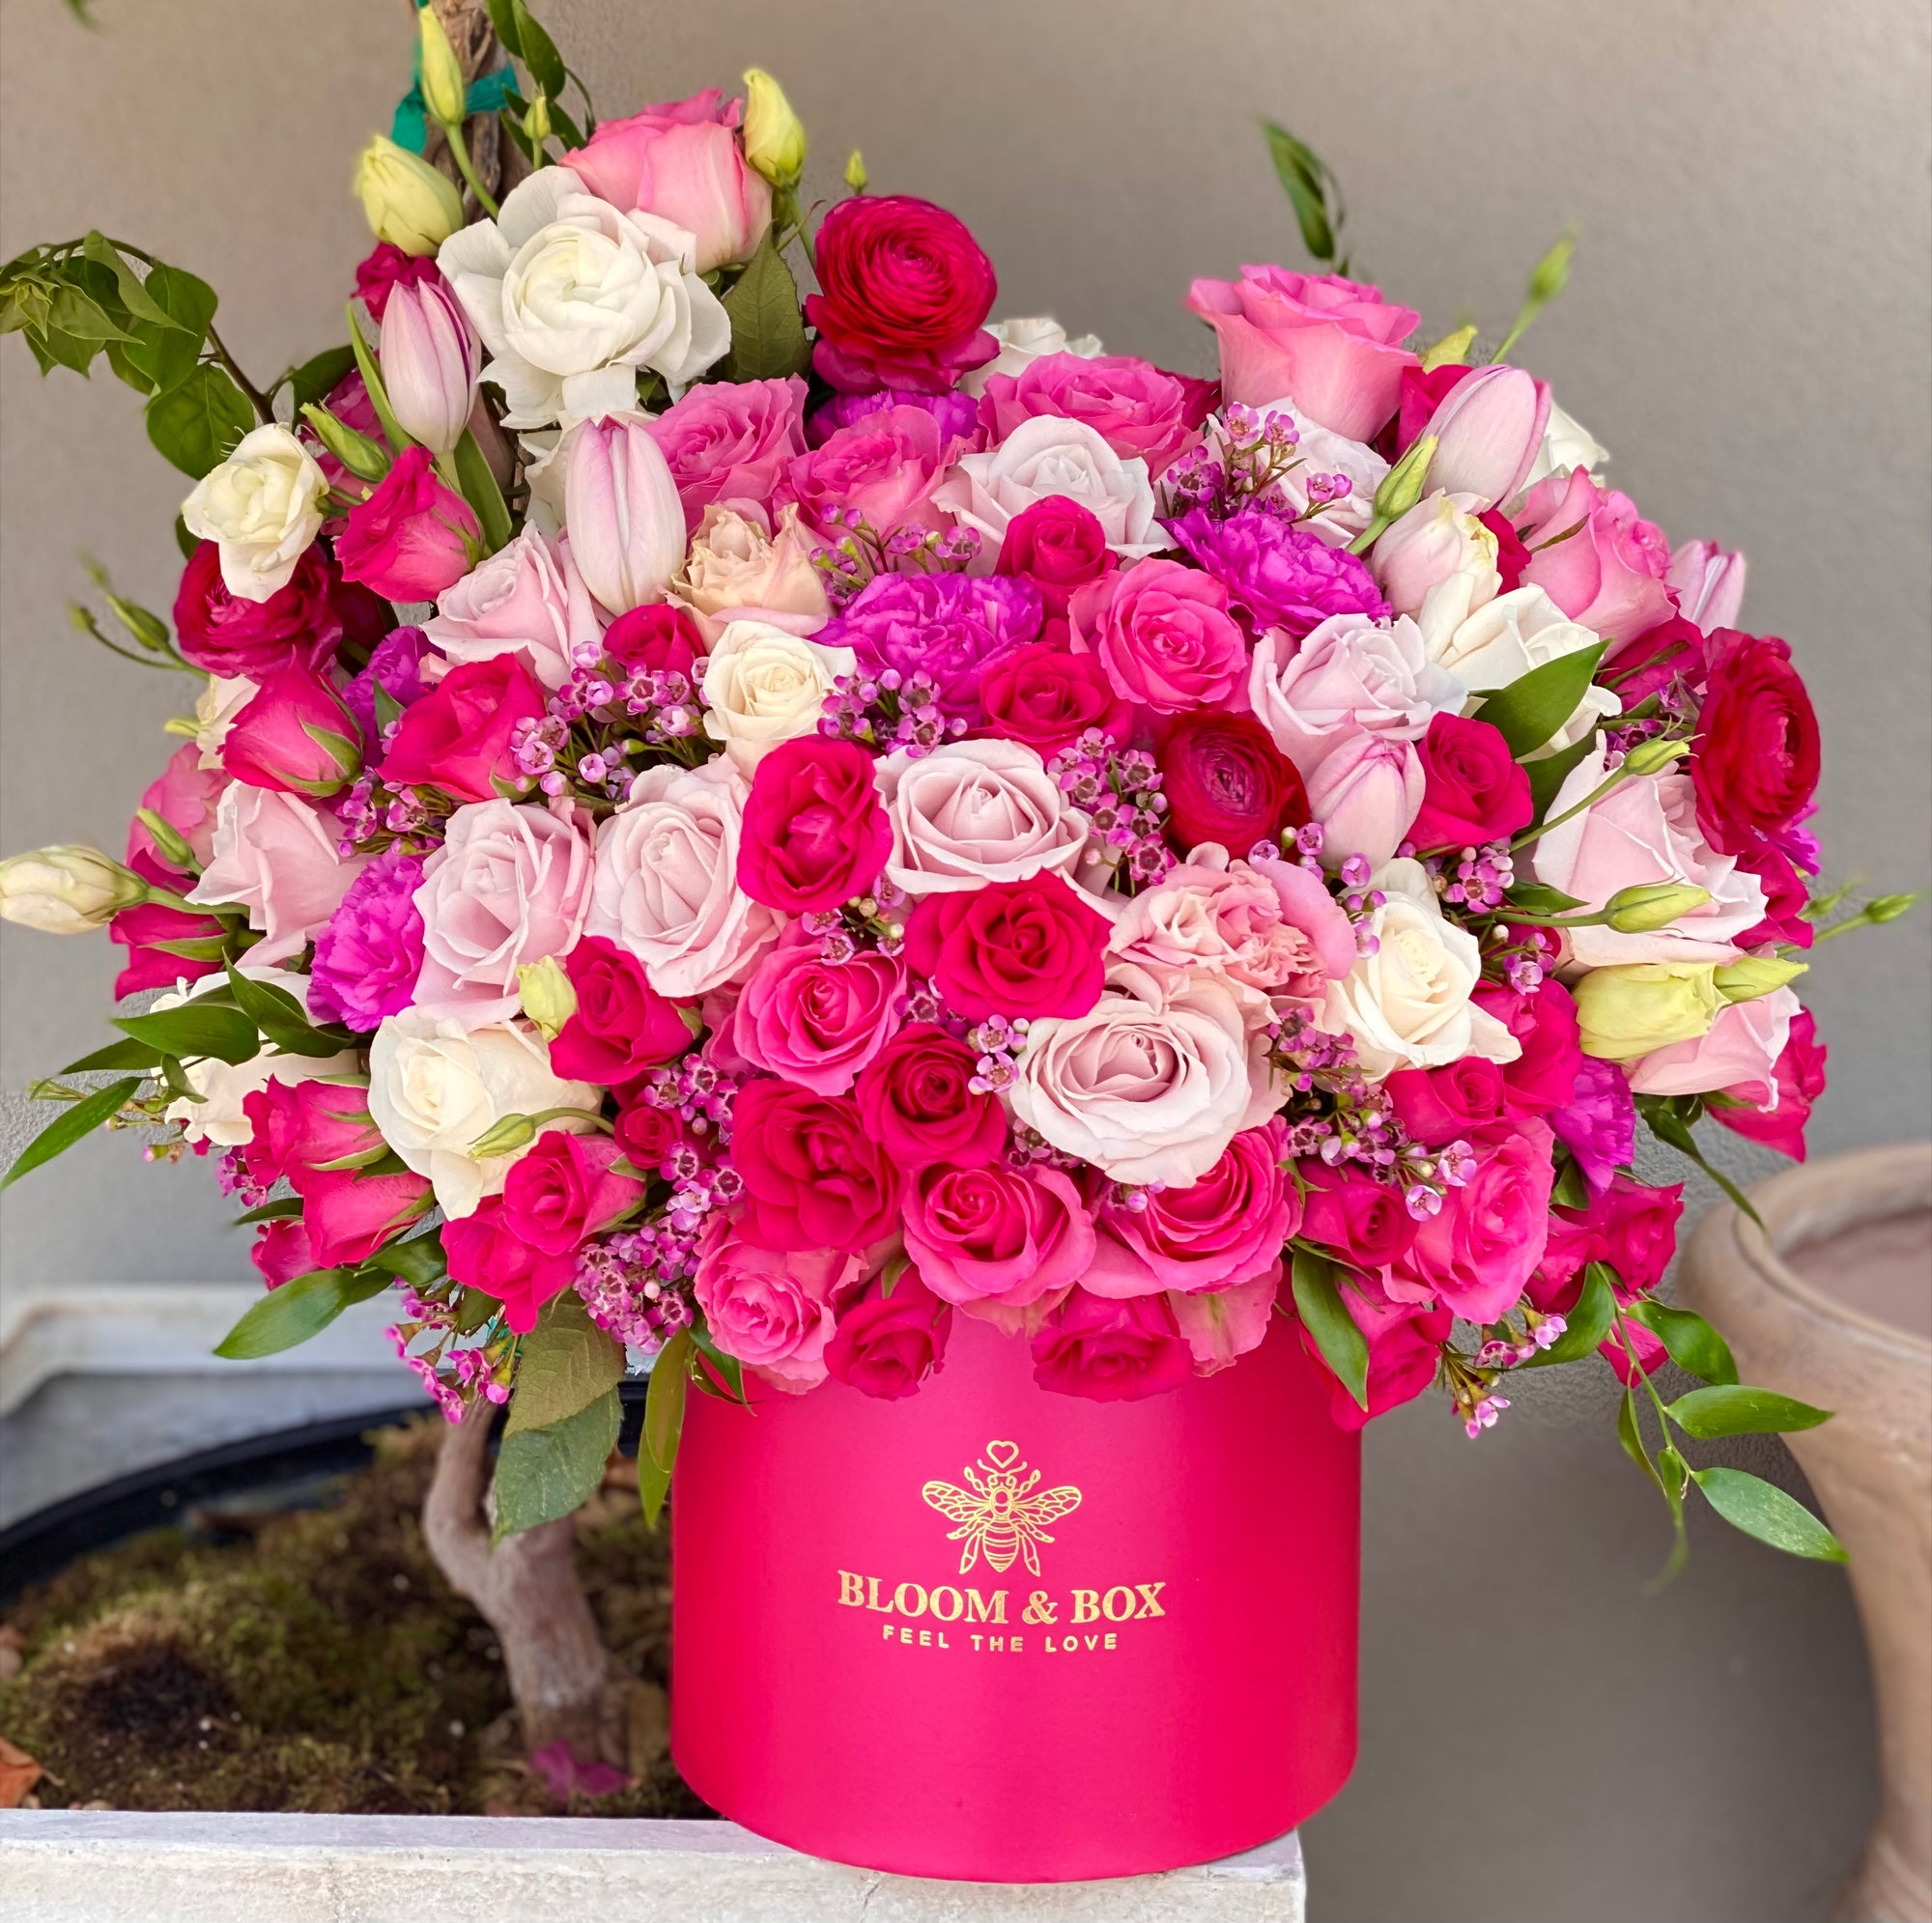 Houston Luxury Flowers & Florist: Call 281.896.7344 – La Vie en Rose Company